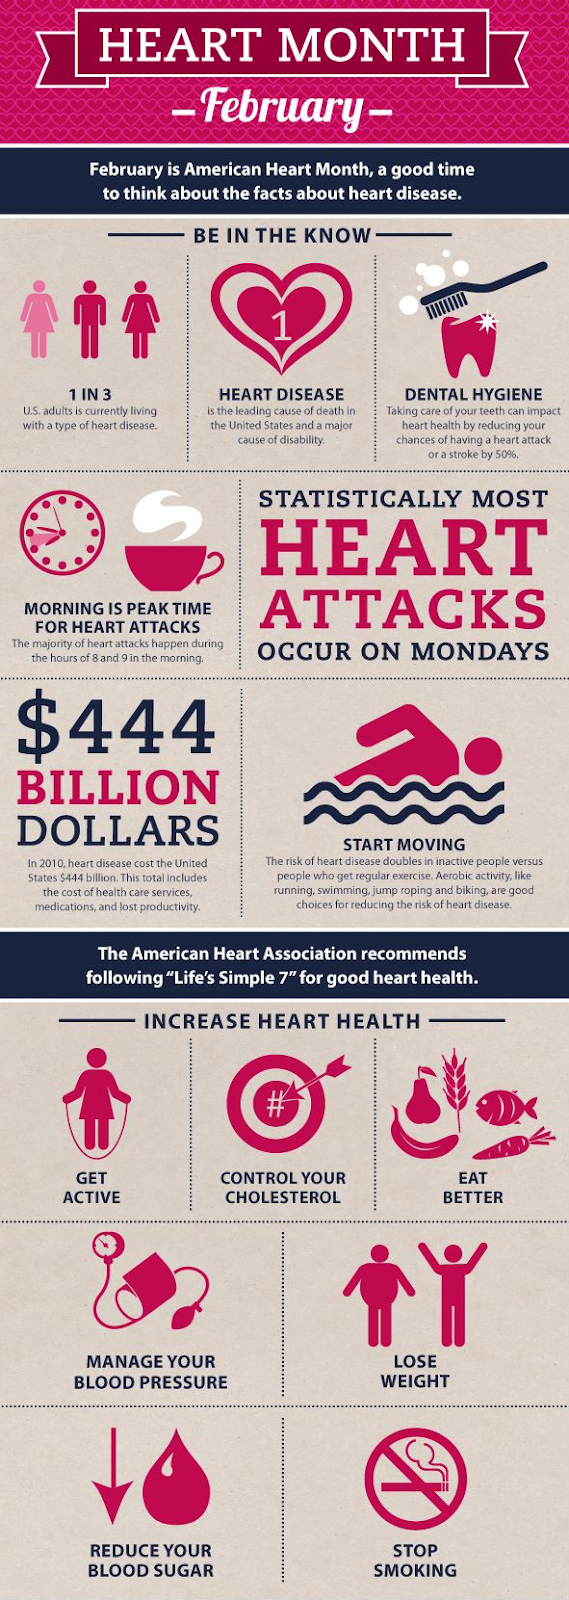 Heart health infographic information in W. Bloomfield, MI